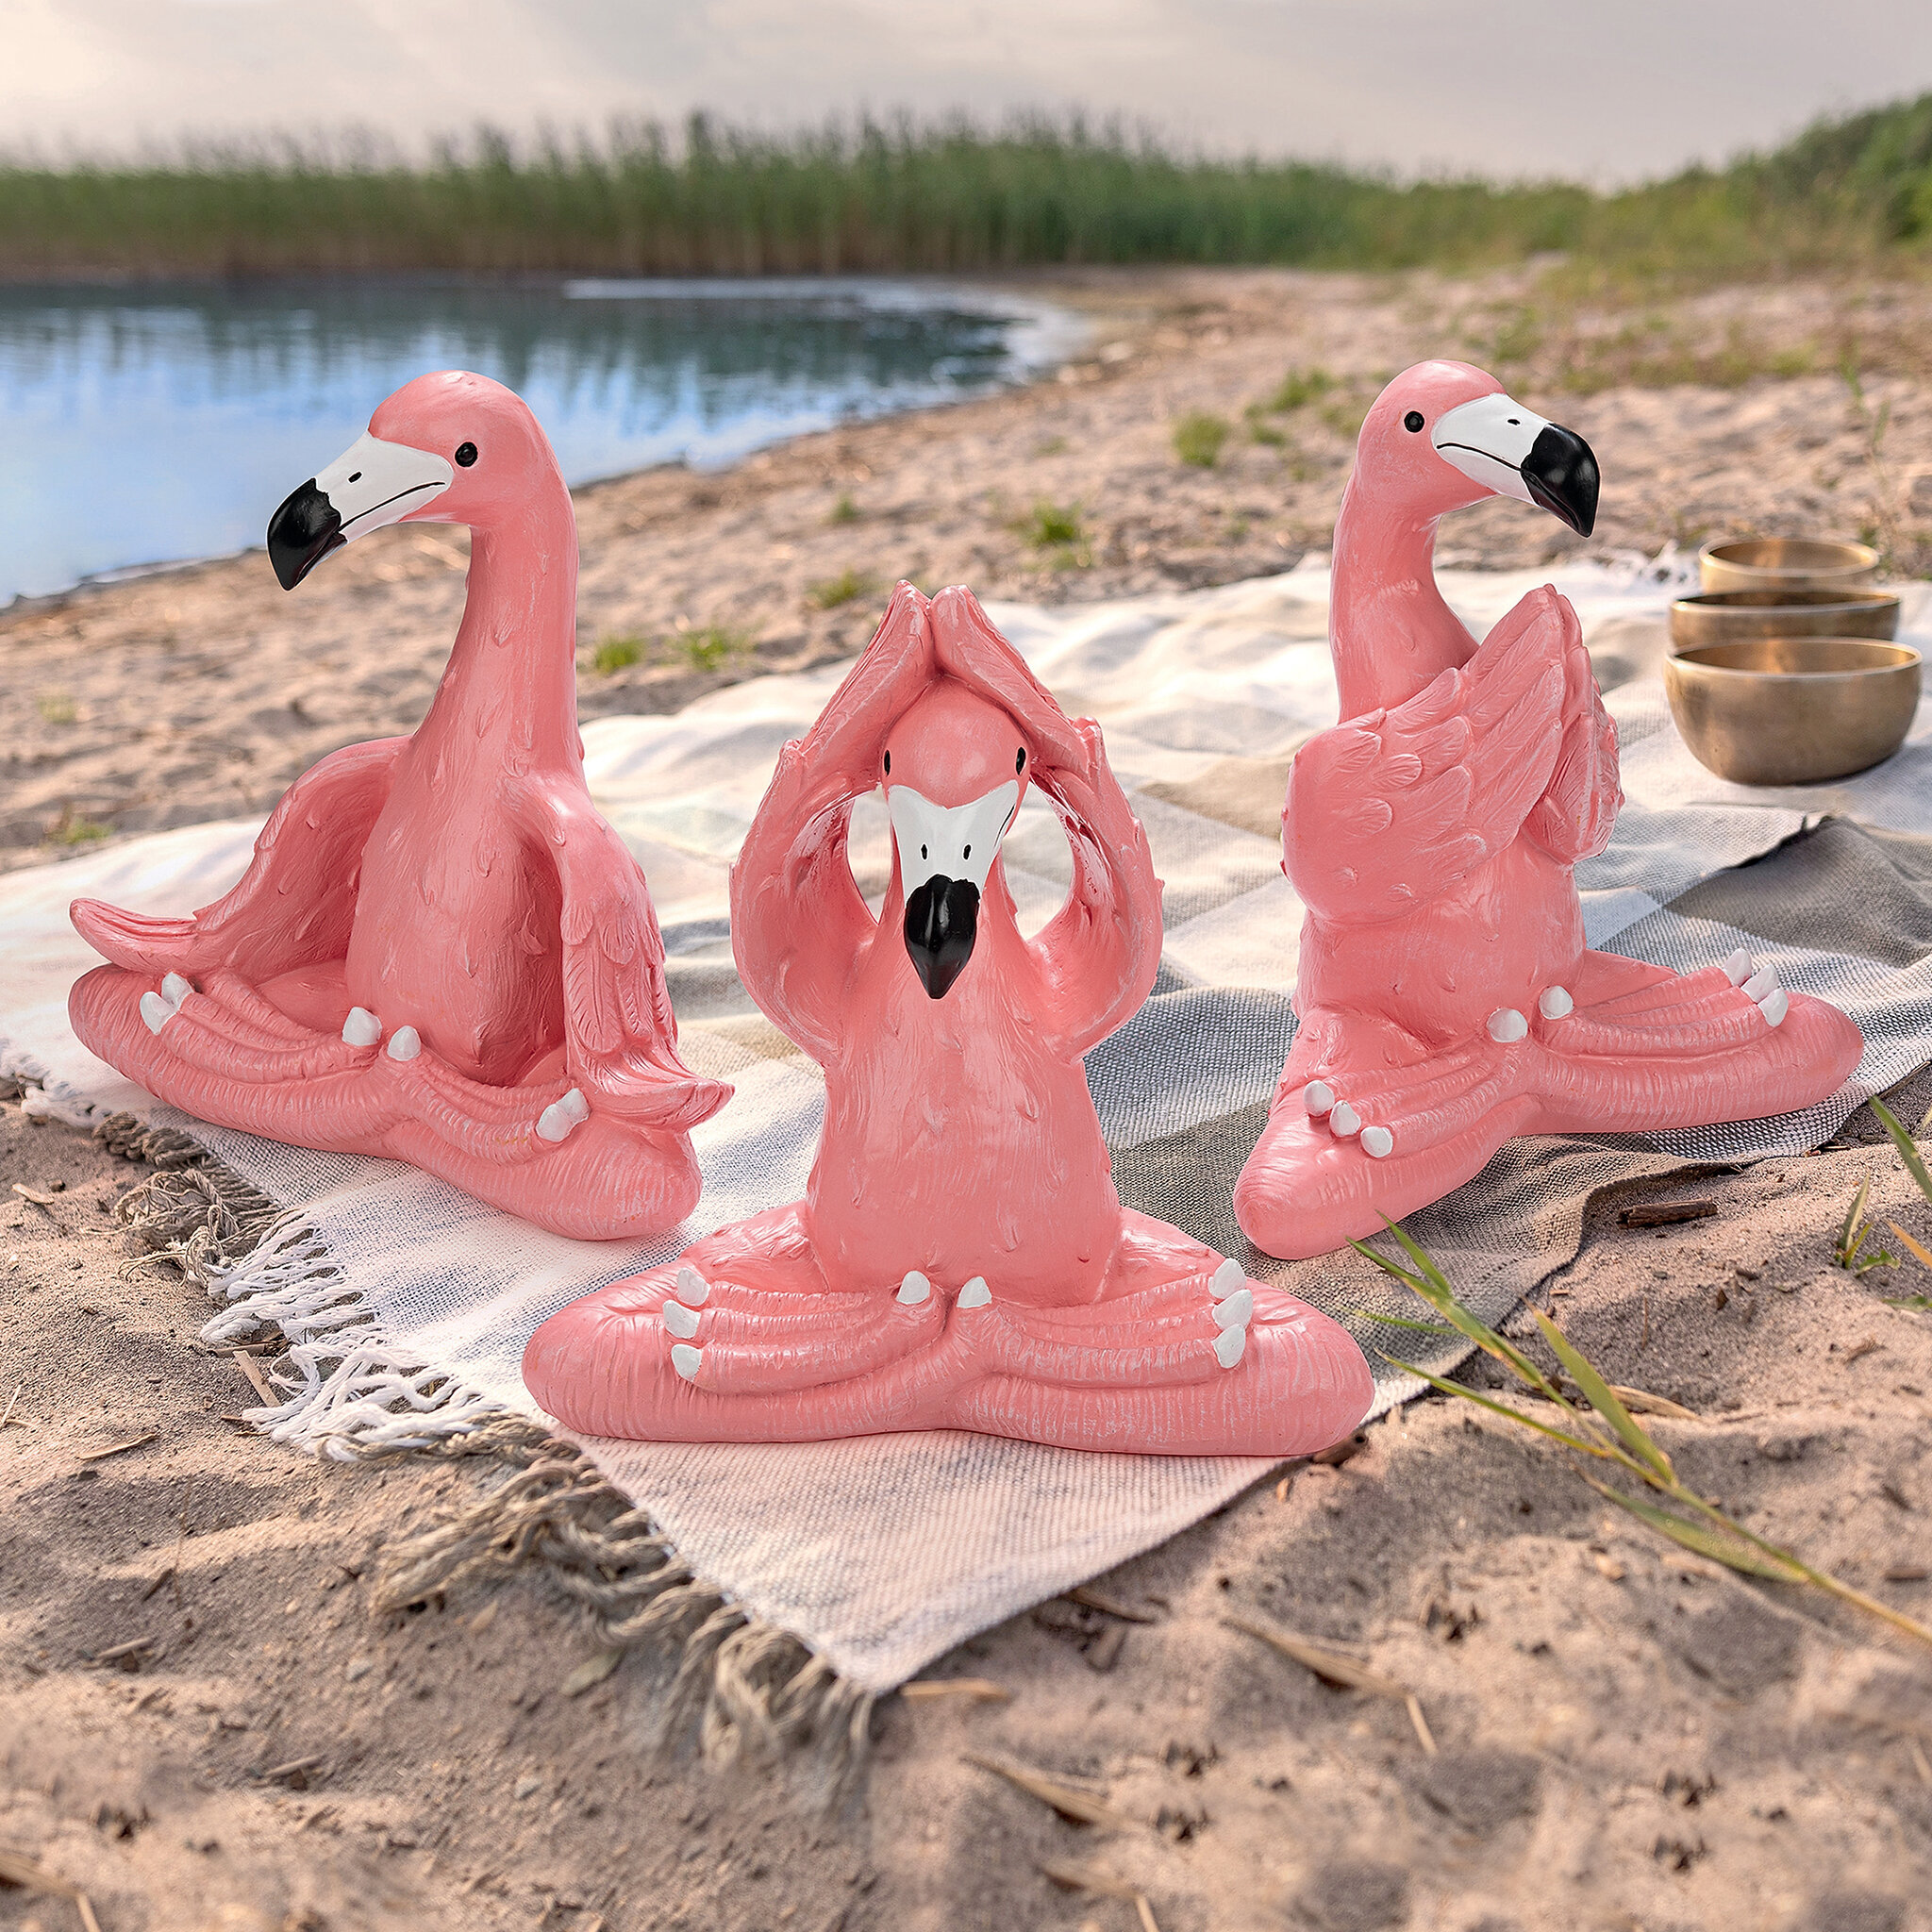 Design Toscano Large Pink Flamingo Yoga Statues & Reviews